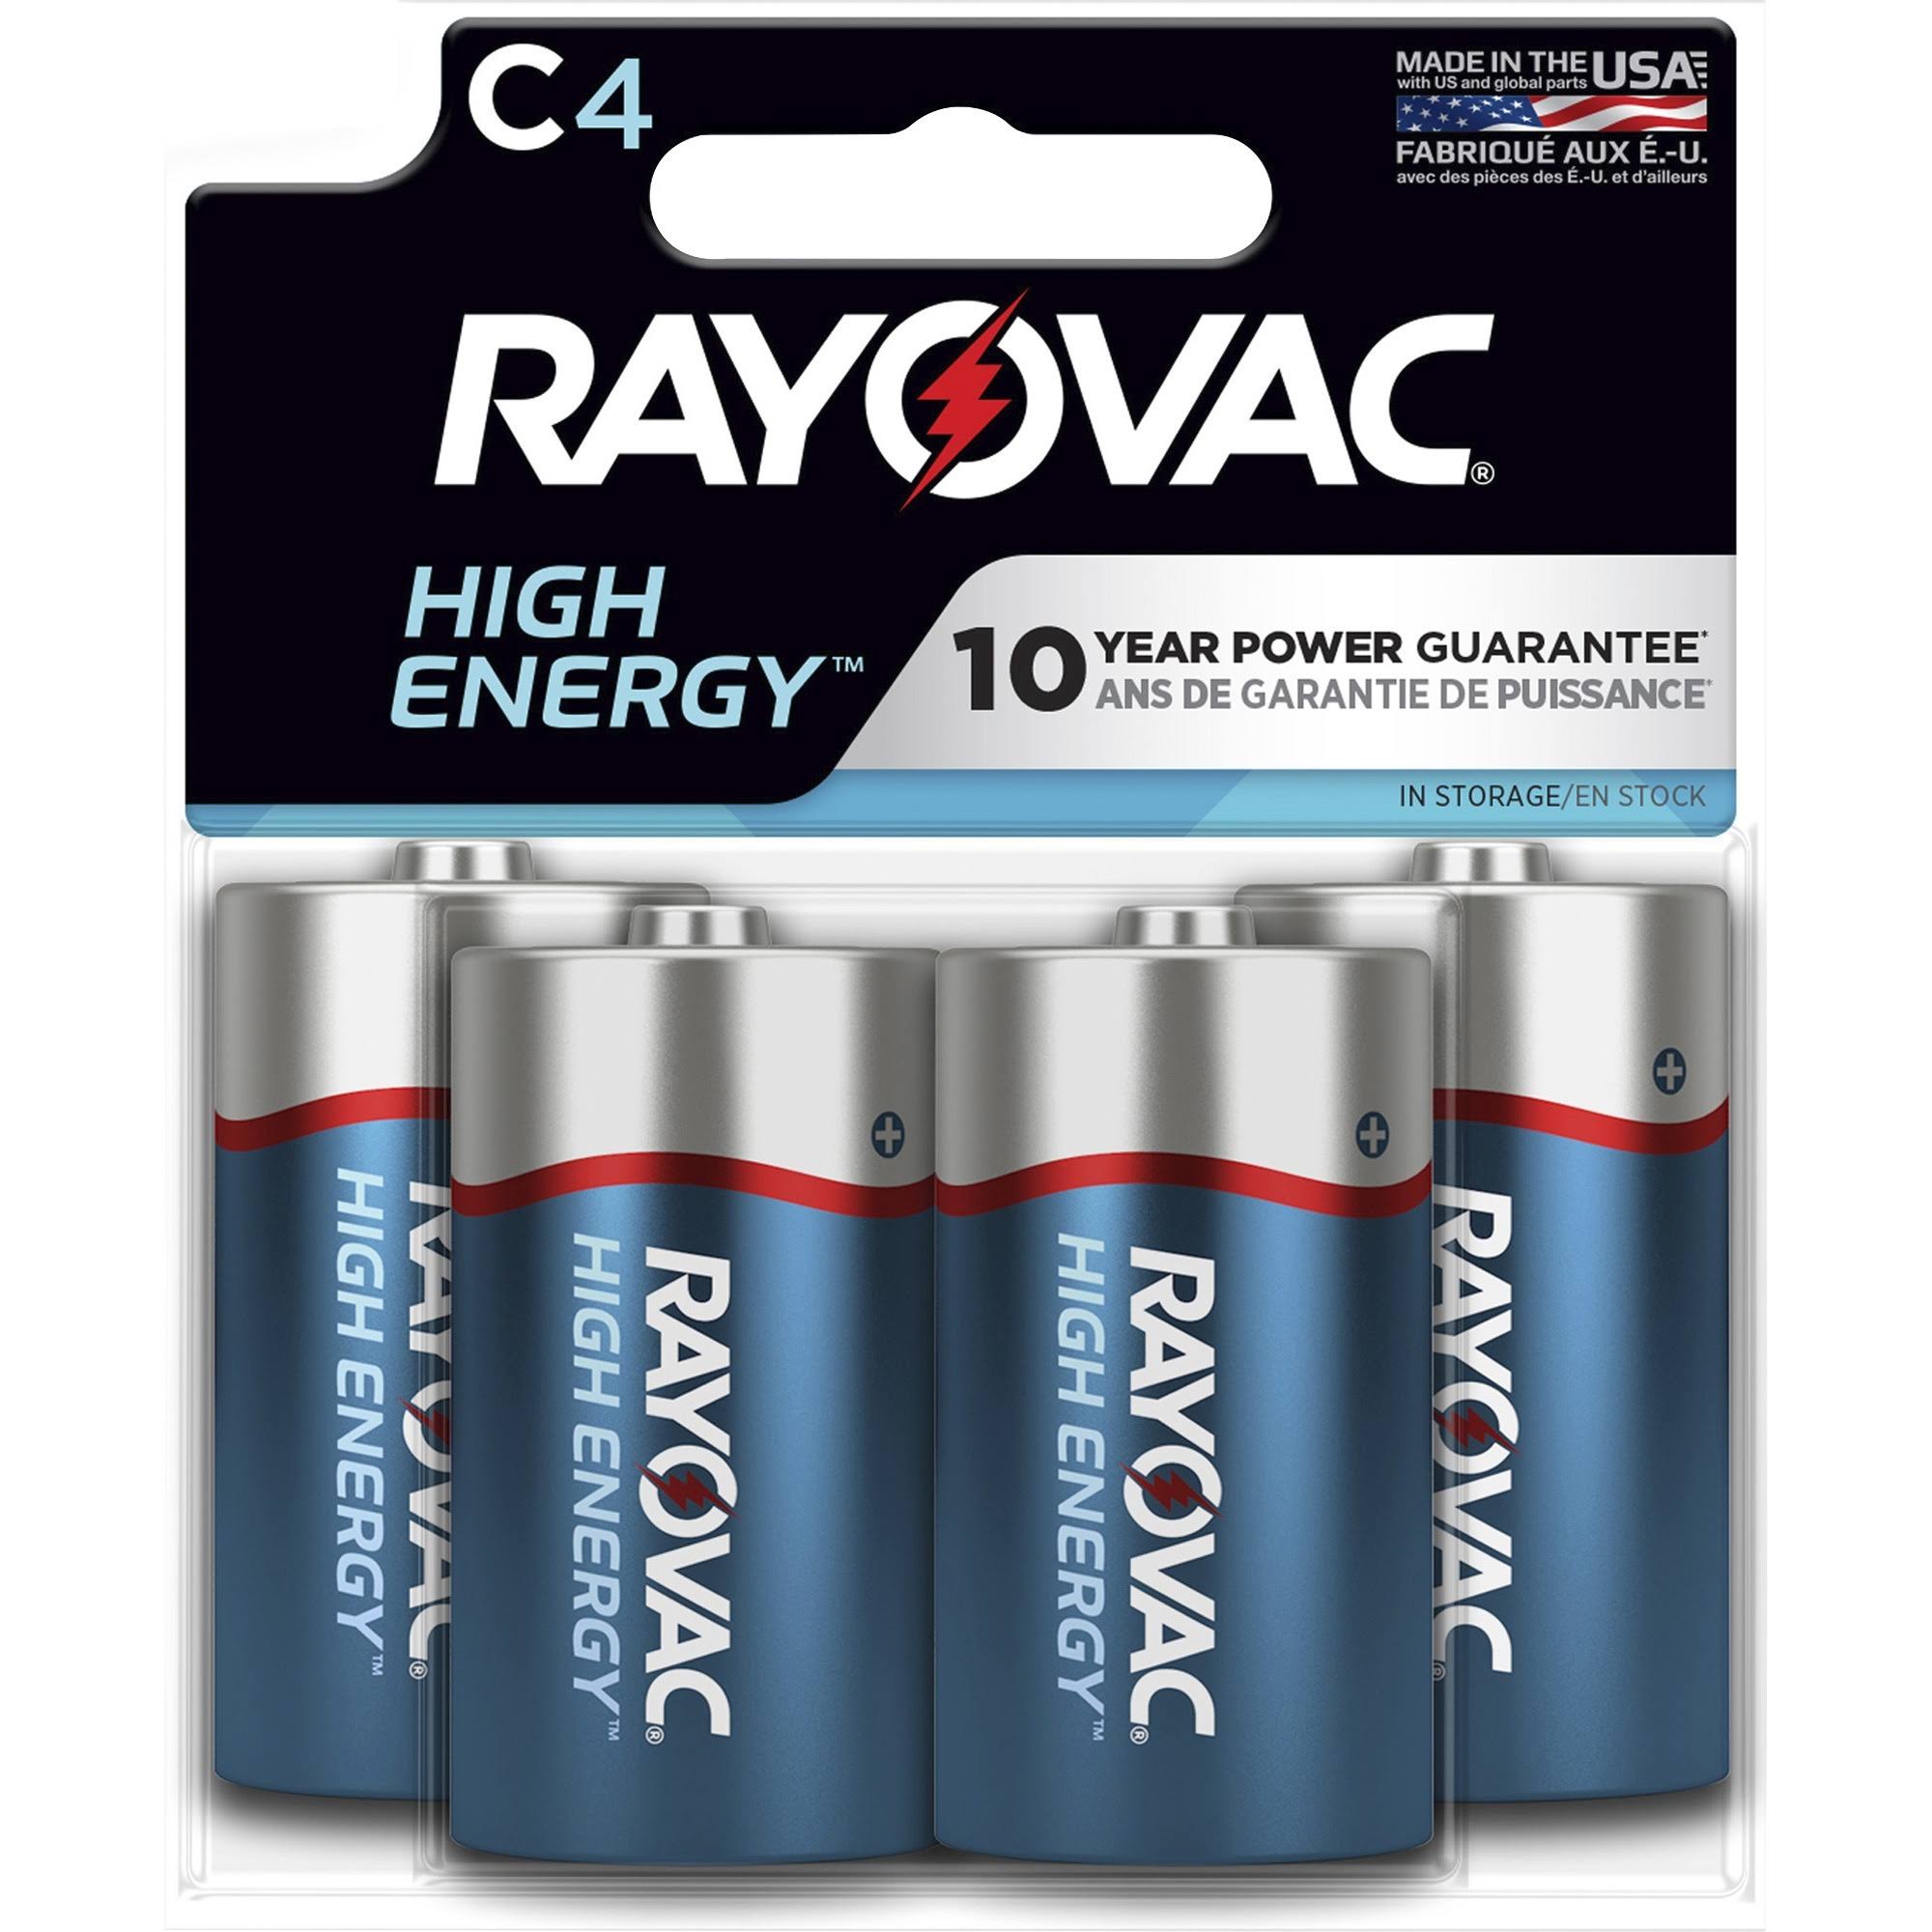 Rayovac High Energy Alkaline Batteries - Size C, x4